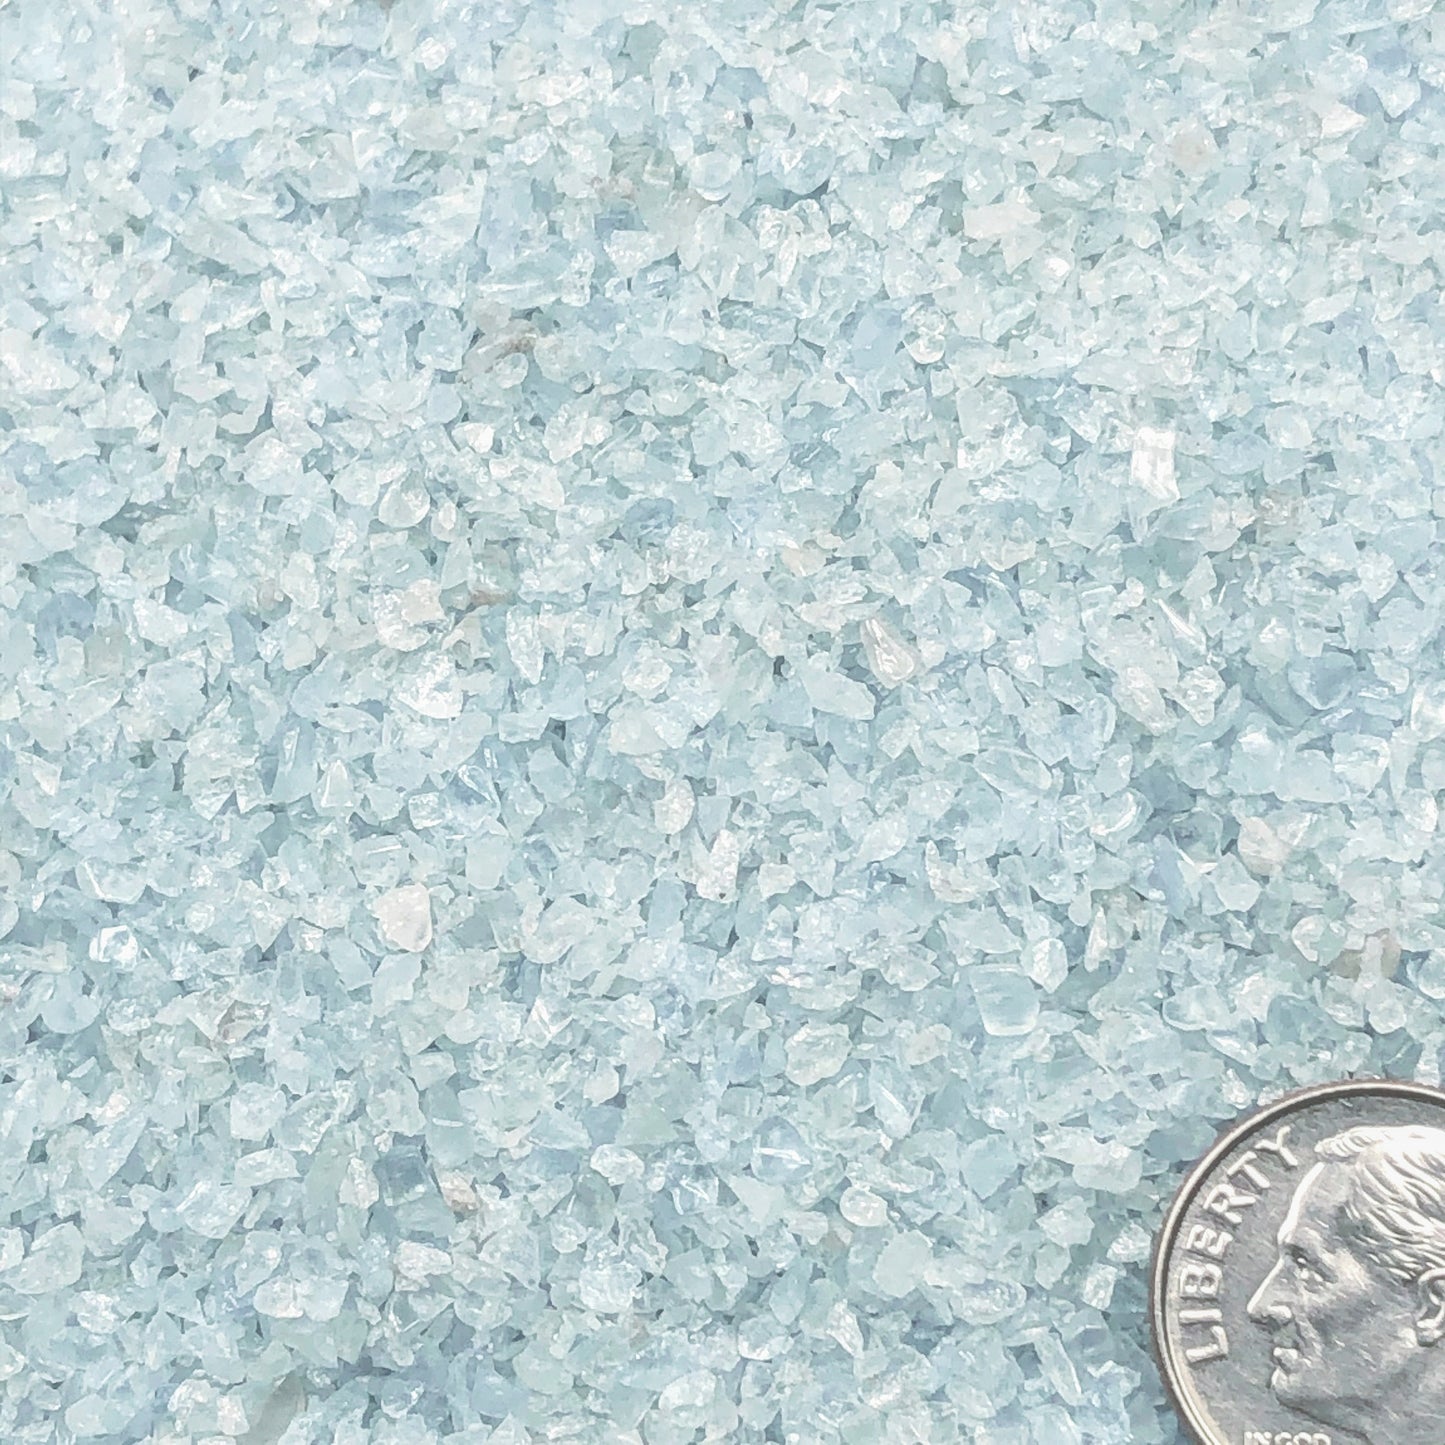 Crushed Blue Aquamarine (Grade A) from Angola, Medium Crush, Sand Size, 2mm - 0.25mm